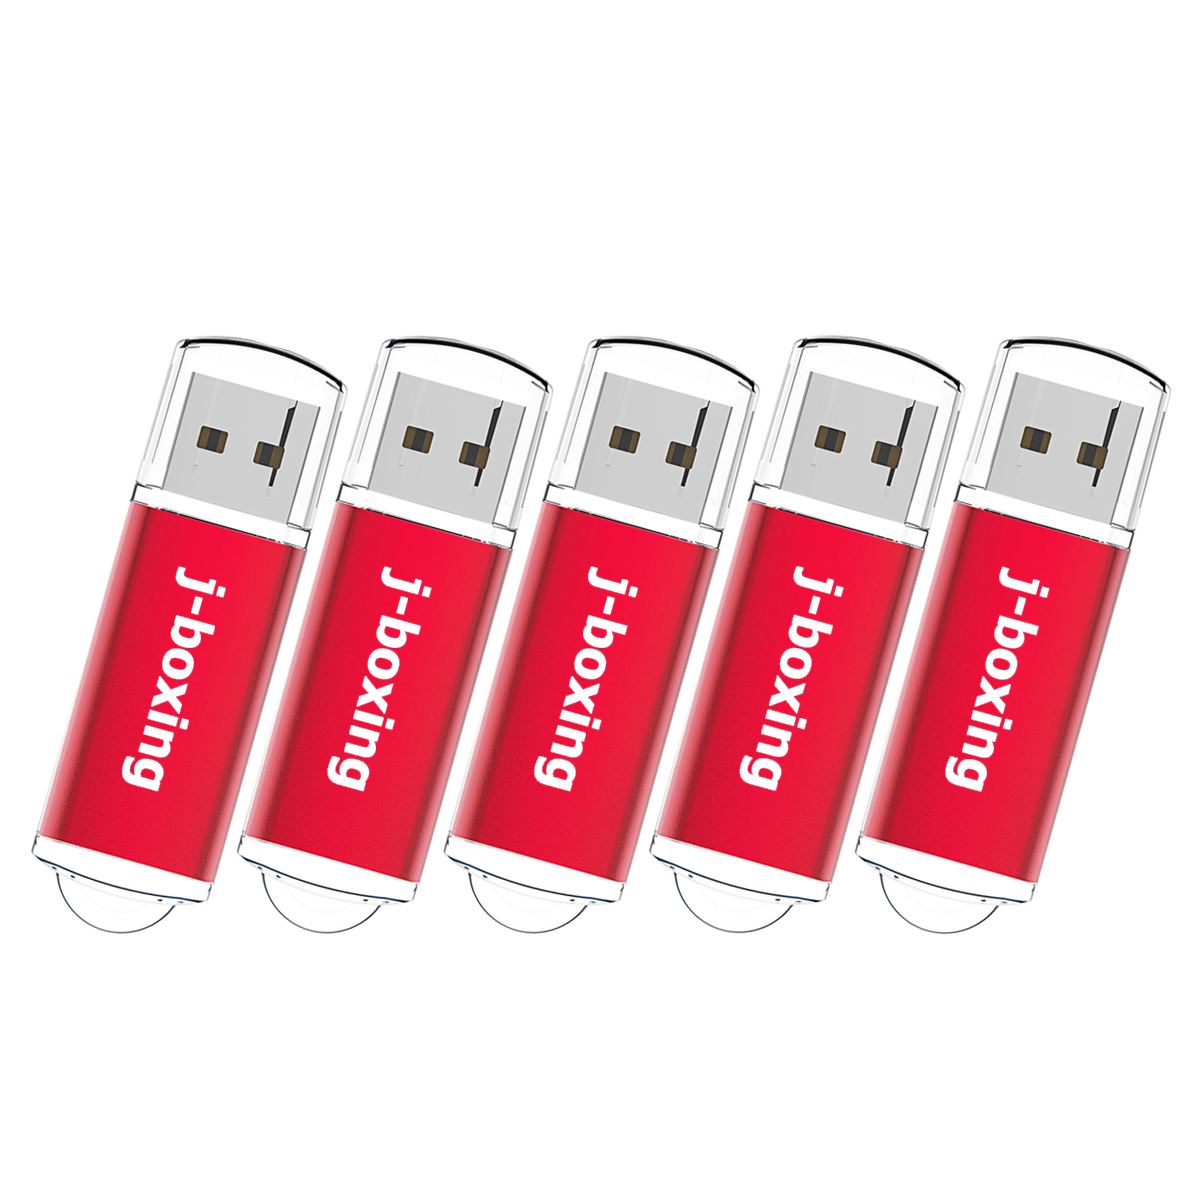 Red 5pcs/lot rectange USB 2.0 Flash Drive Flash Flash Drive High Speed Stare Stape 1G 2G 4G 8G 16G 32G 64G для ПК ноутбук